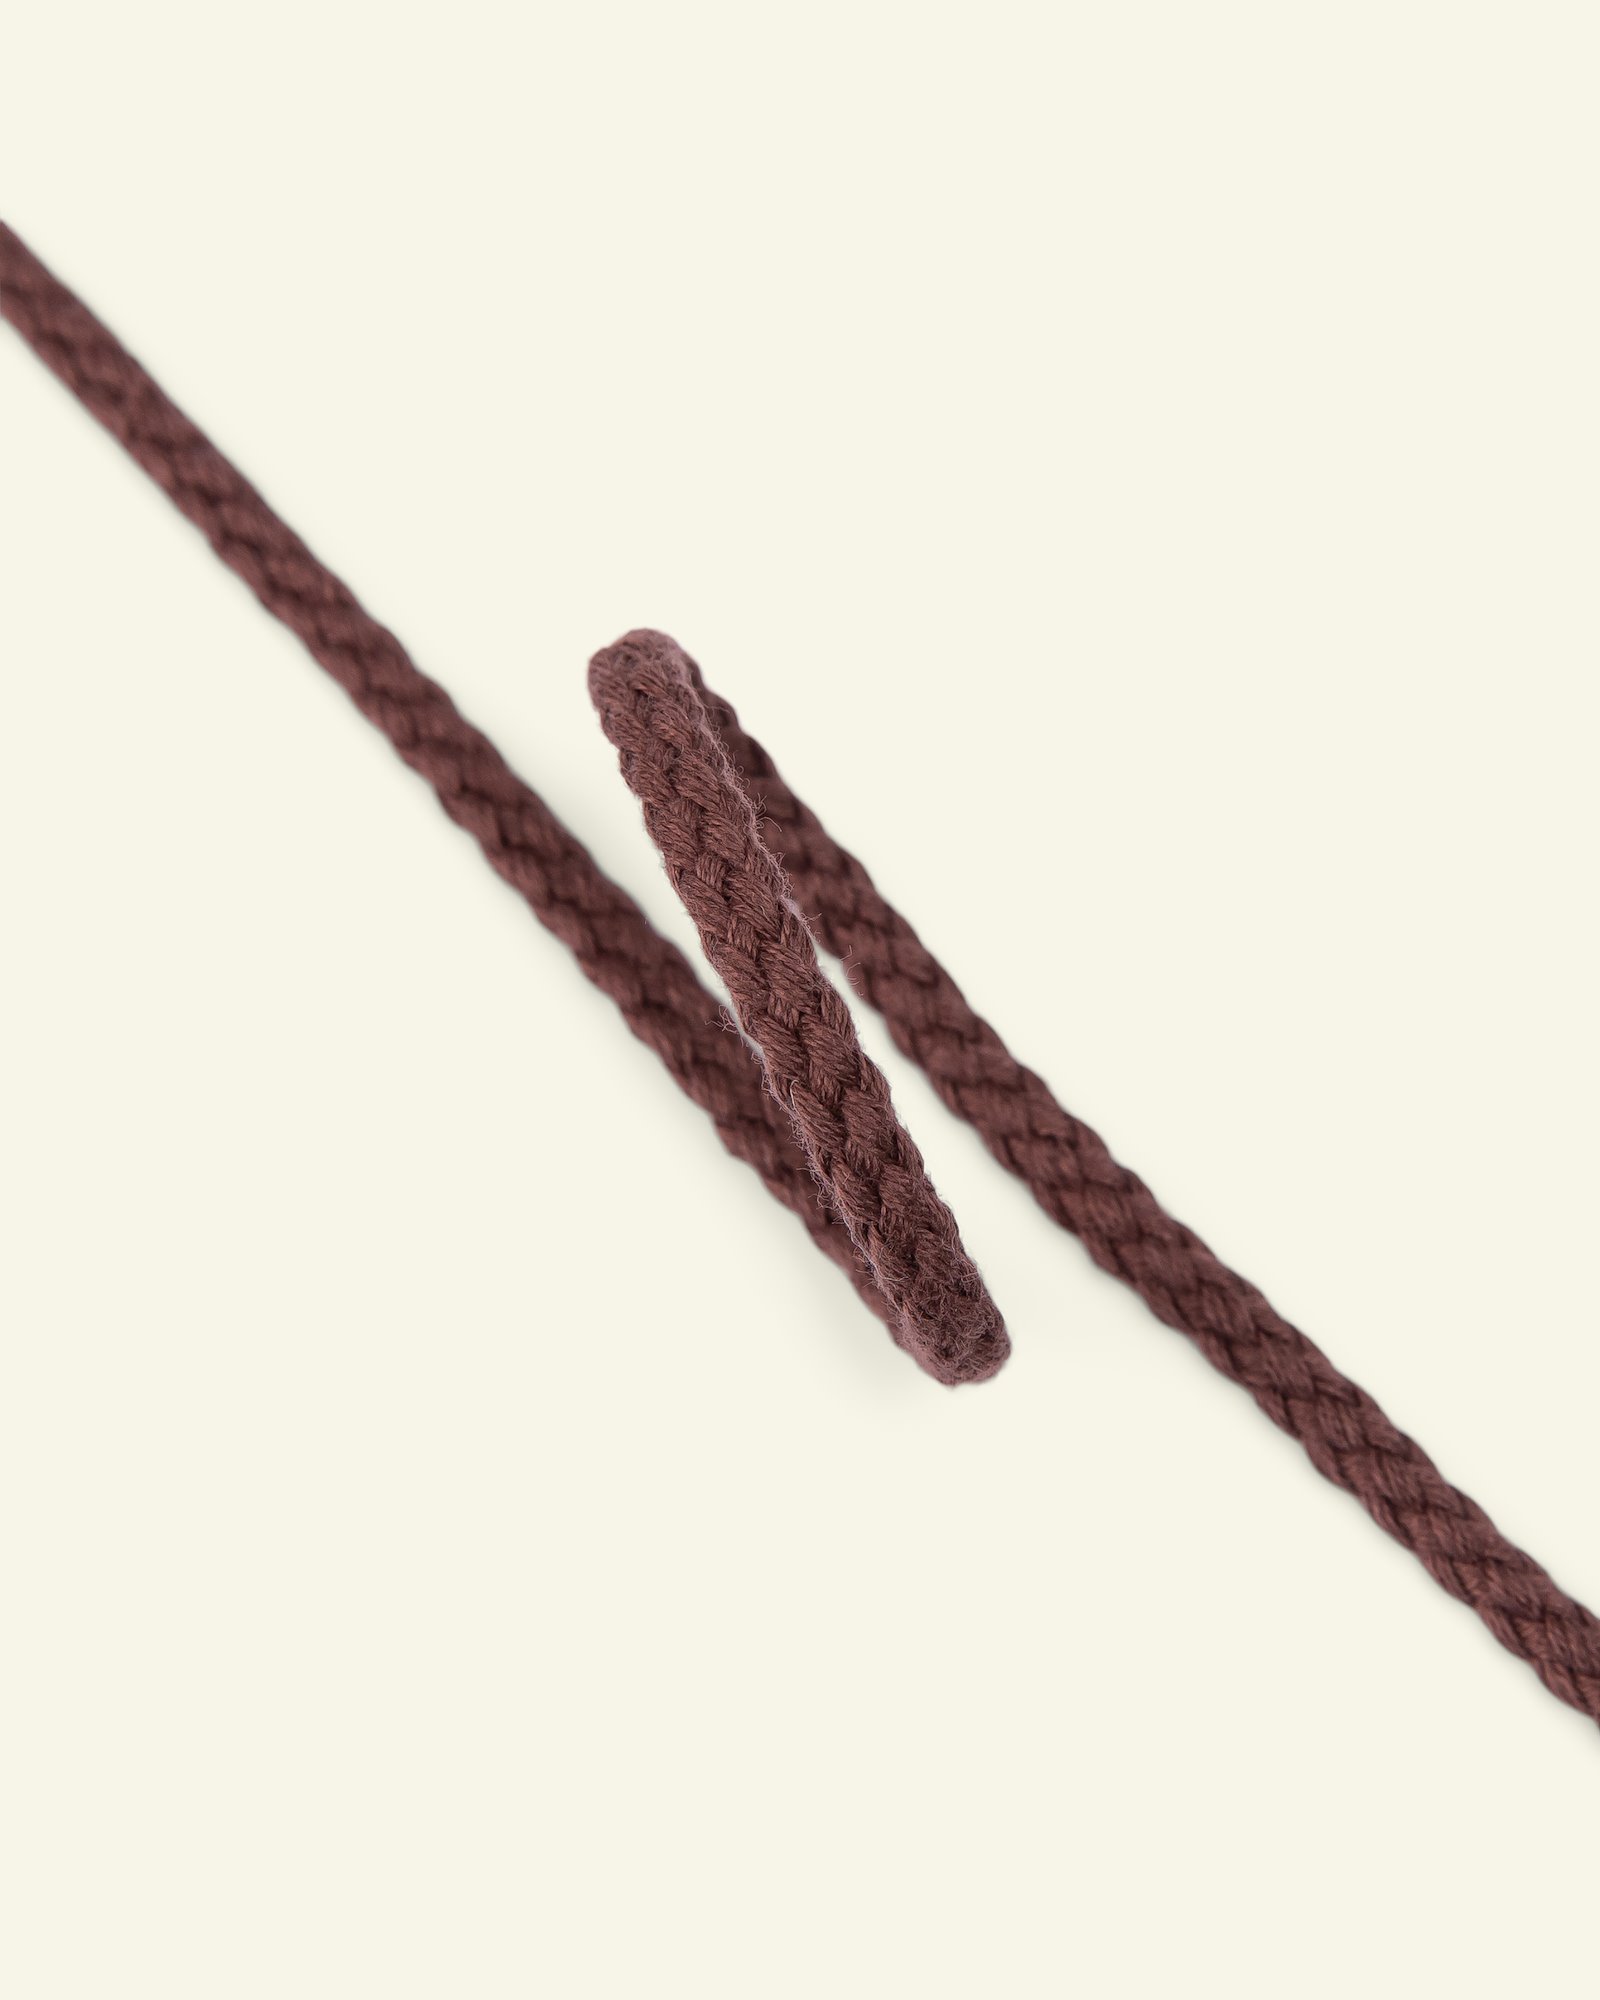 Anorak cord 4.5mm chestnut 5m 75234_pack